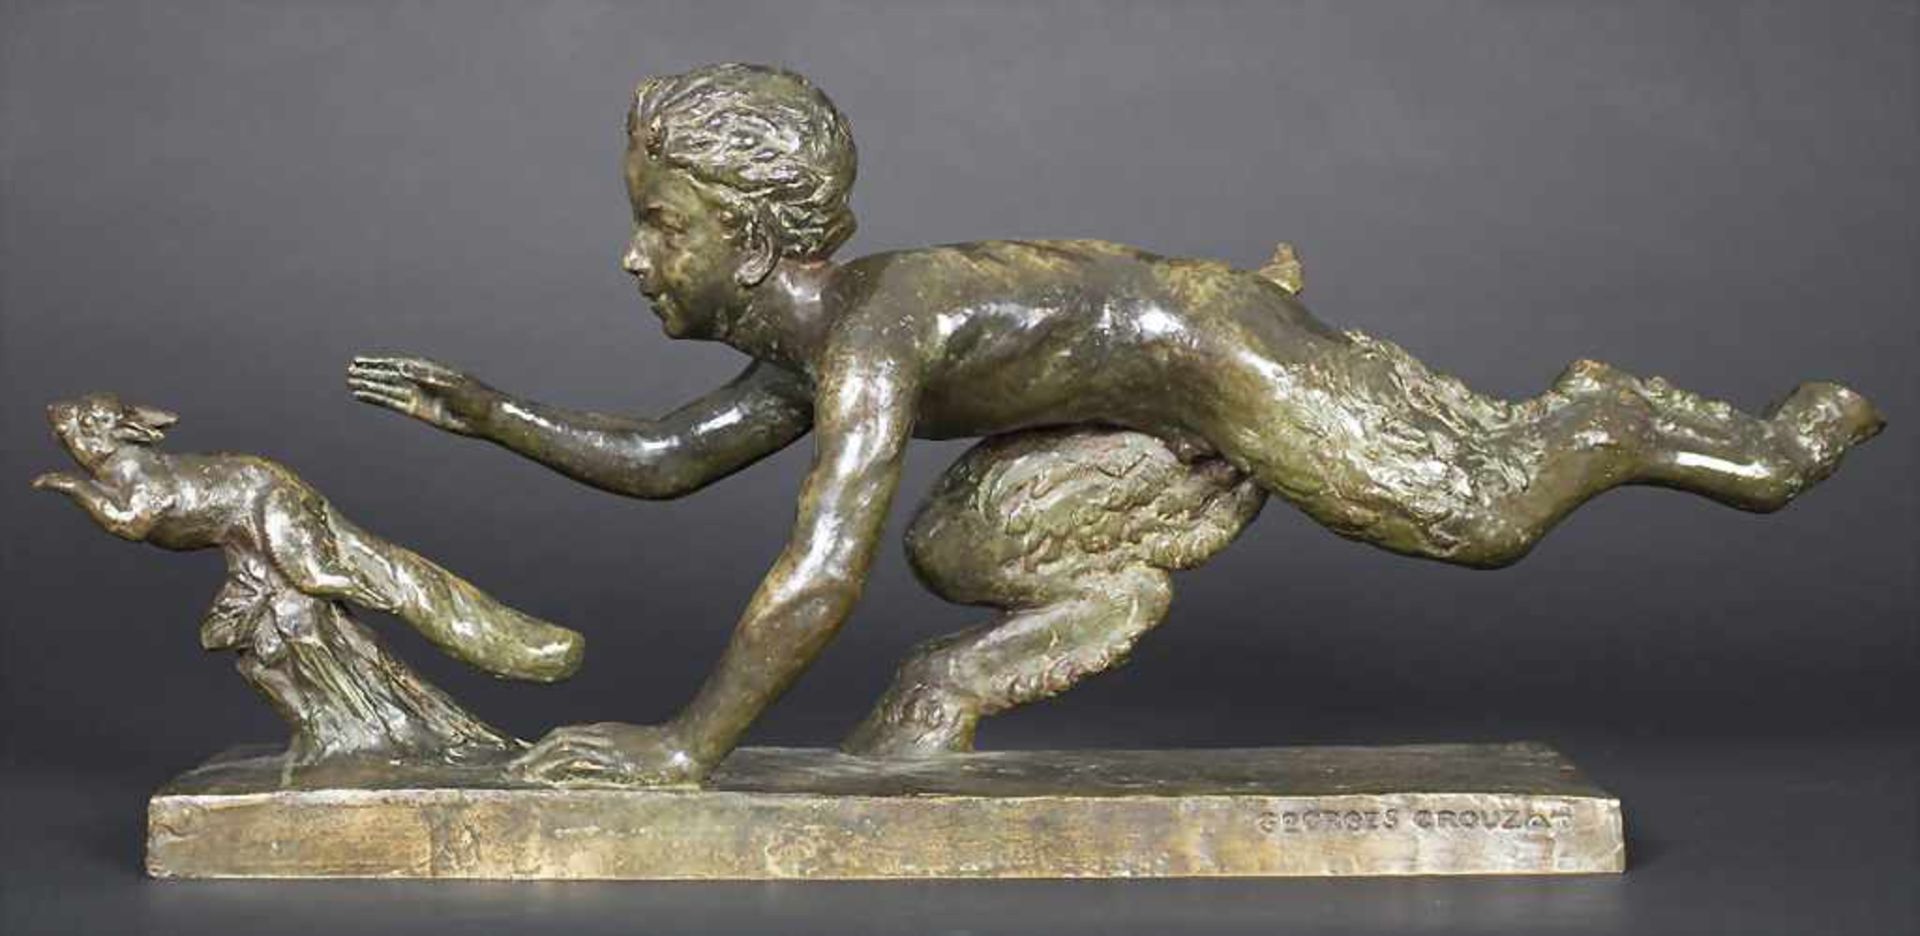 Faun mit Eichhörnchen / A faun with a squirrel, Georges Crouzat, (1904-1976)Material: Bronze,